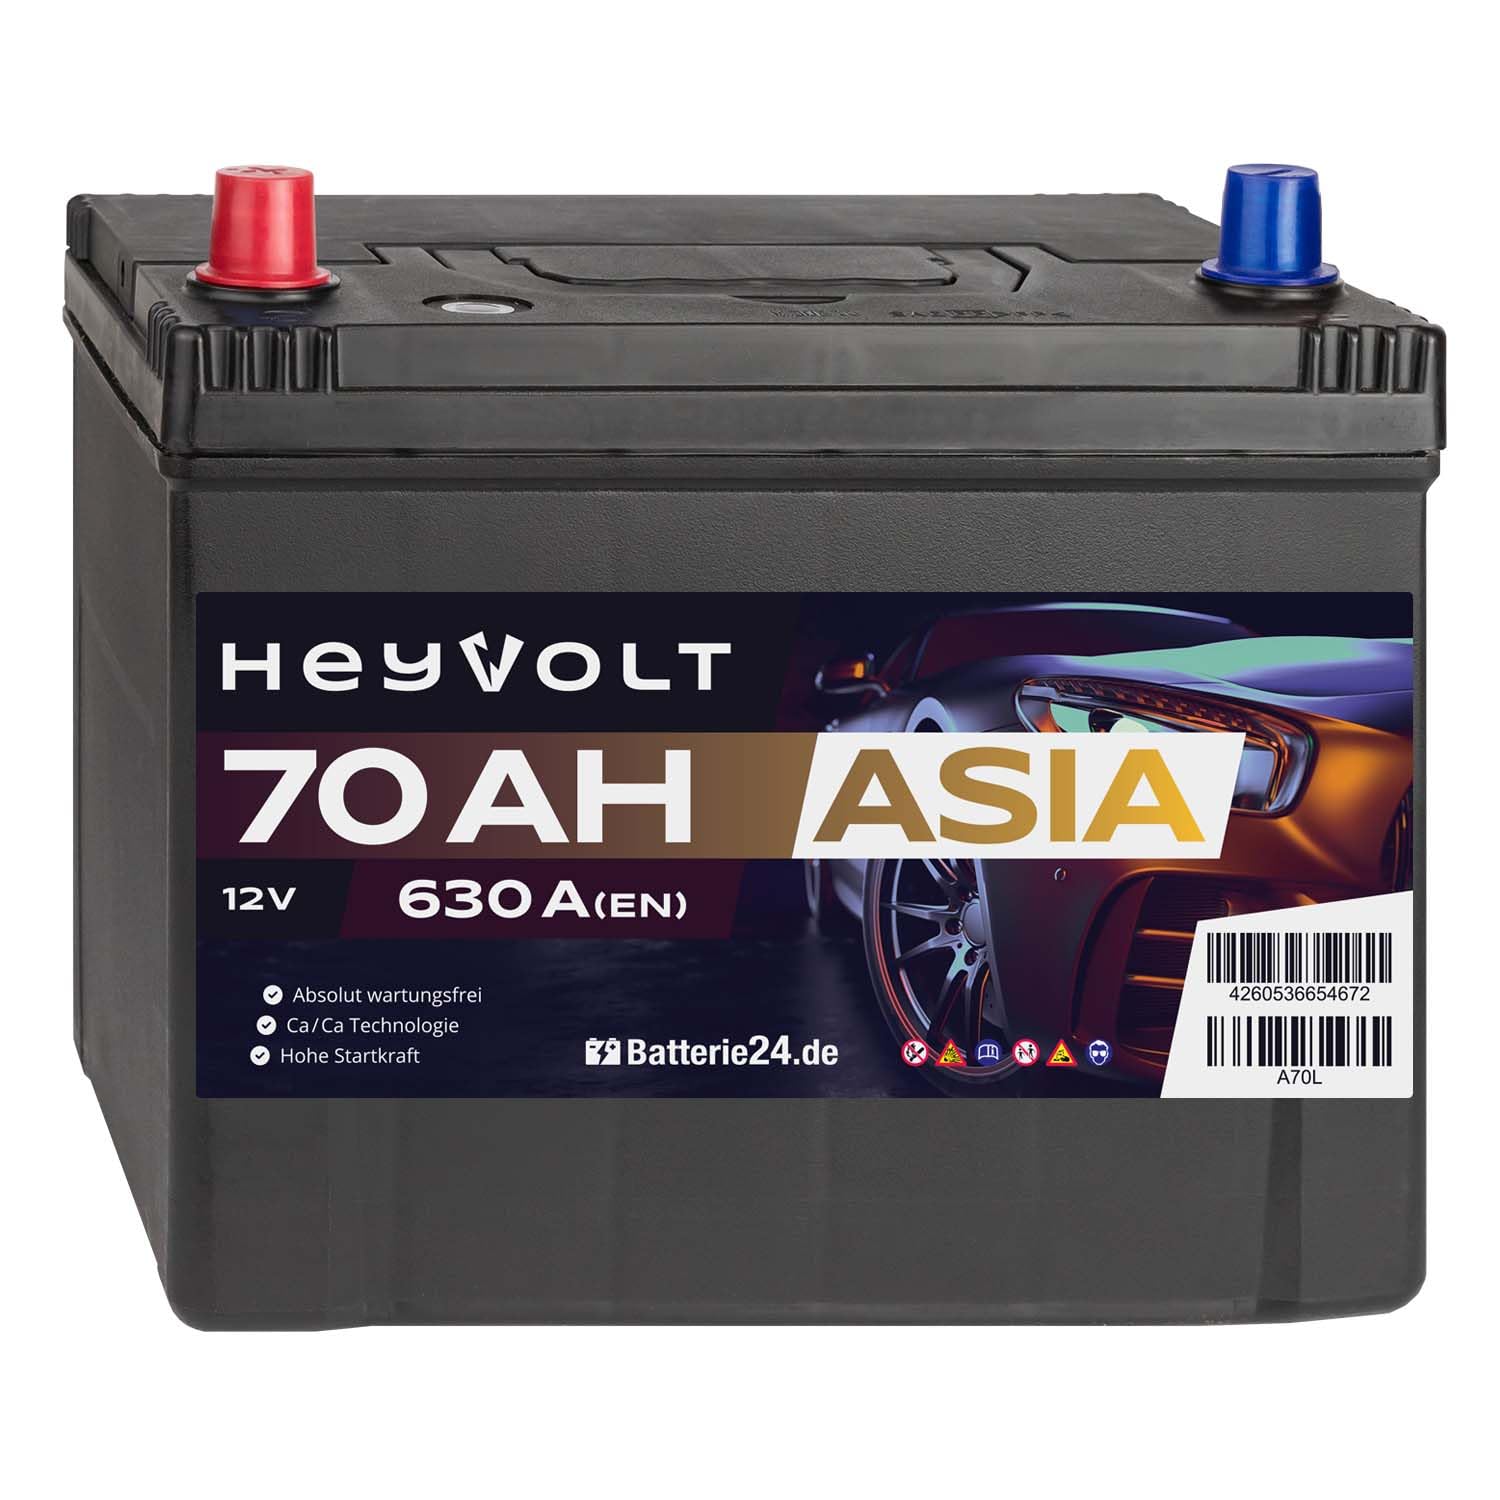 HeyVolt Asia Autobatterie 12V 70Ah 630A/EN Starterbatterie, absolut wartungsfrei, Pluspol Links von Batterie24.de